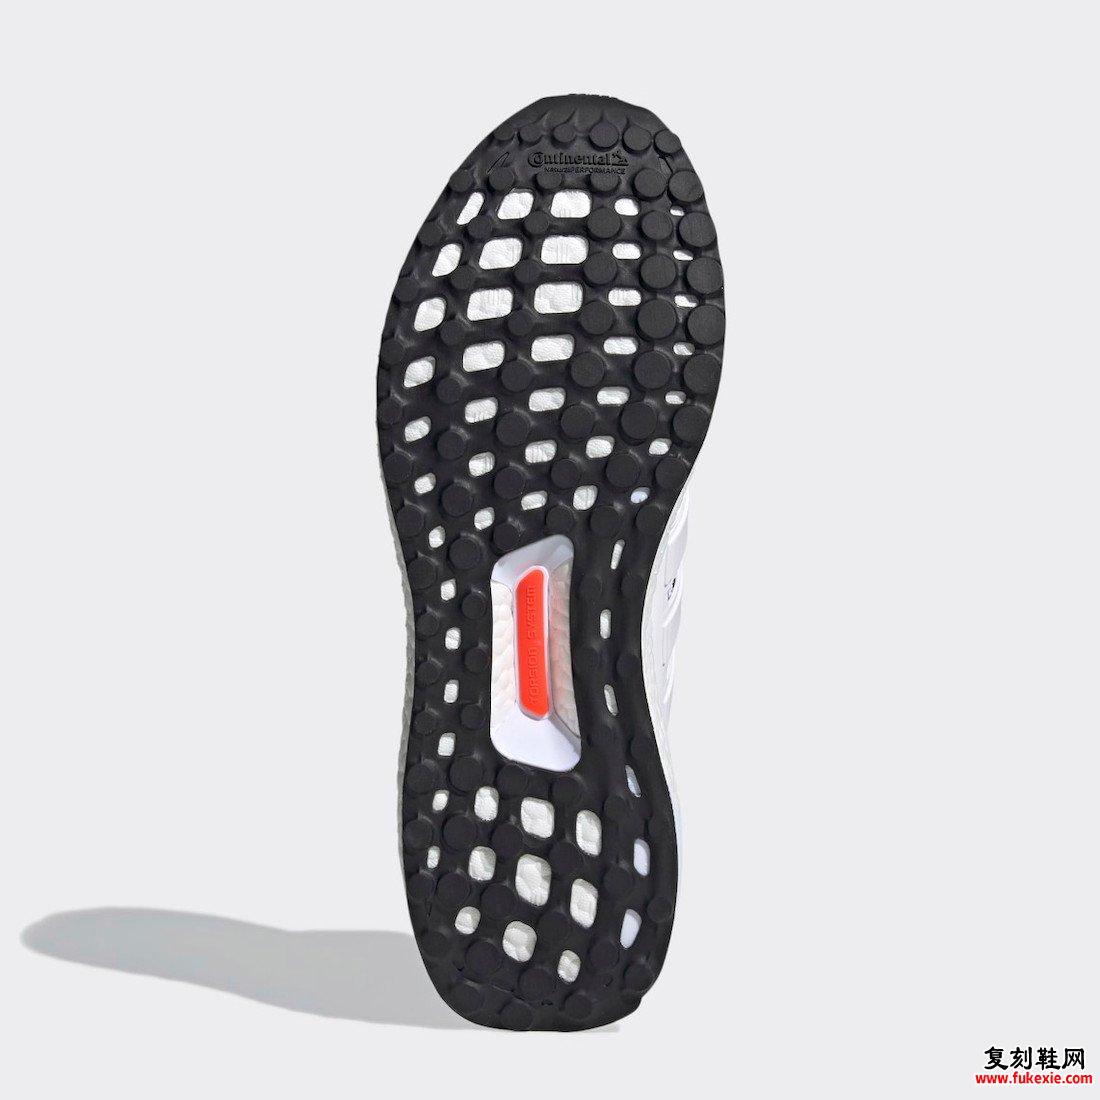 adidas Ultra Boost 5.0 DNA Zebra G54960发售日期